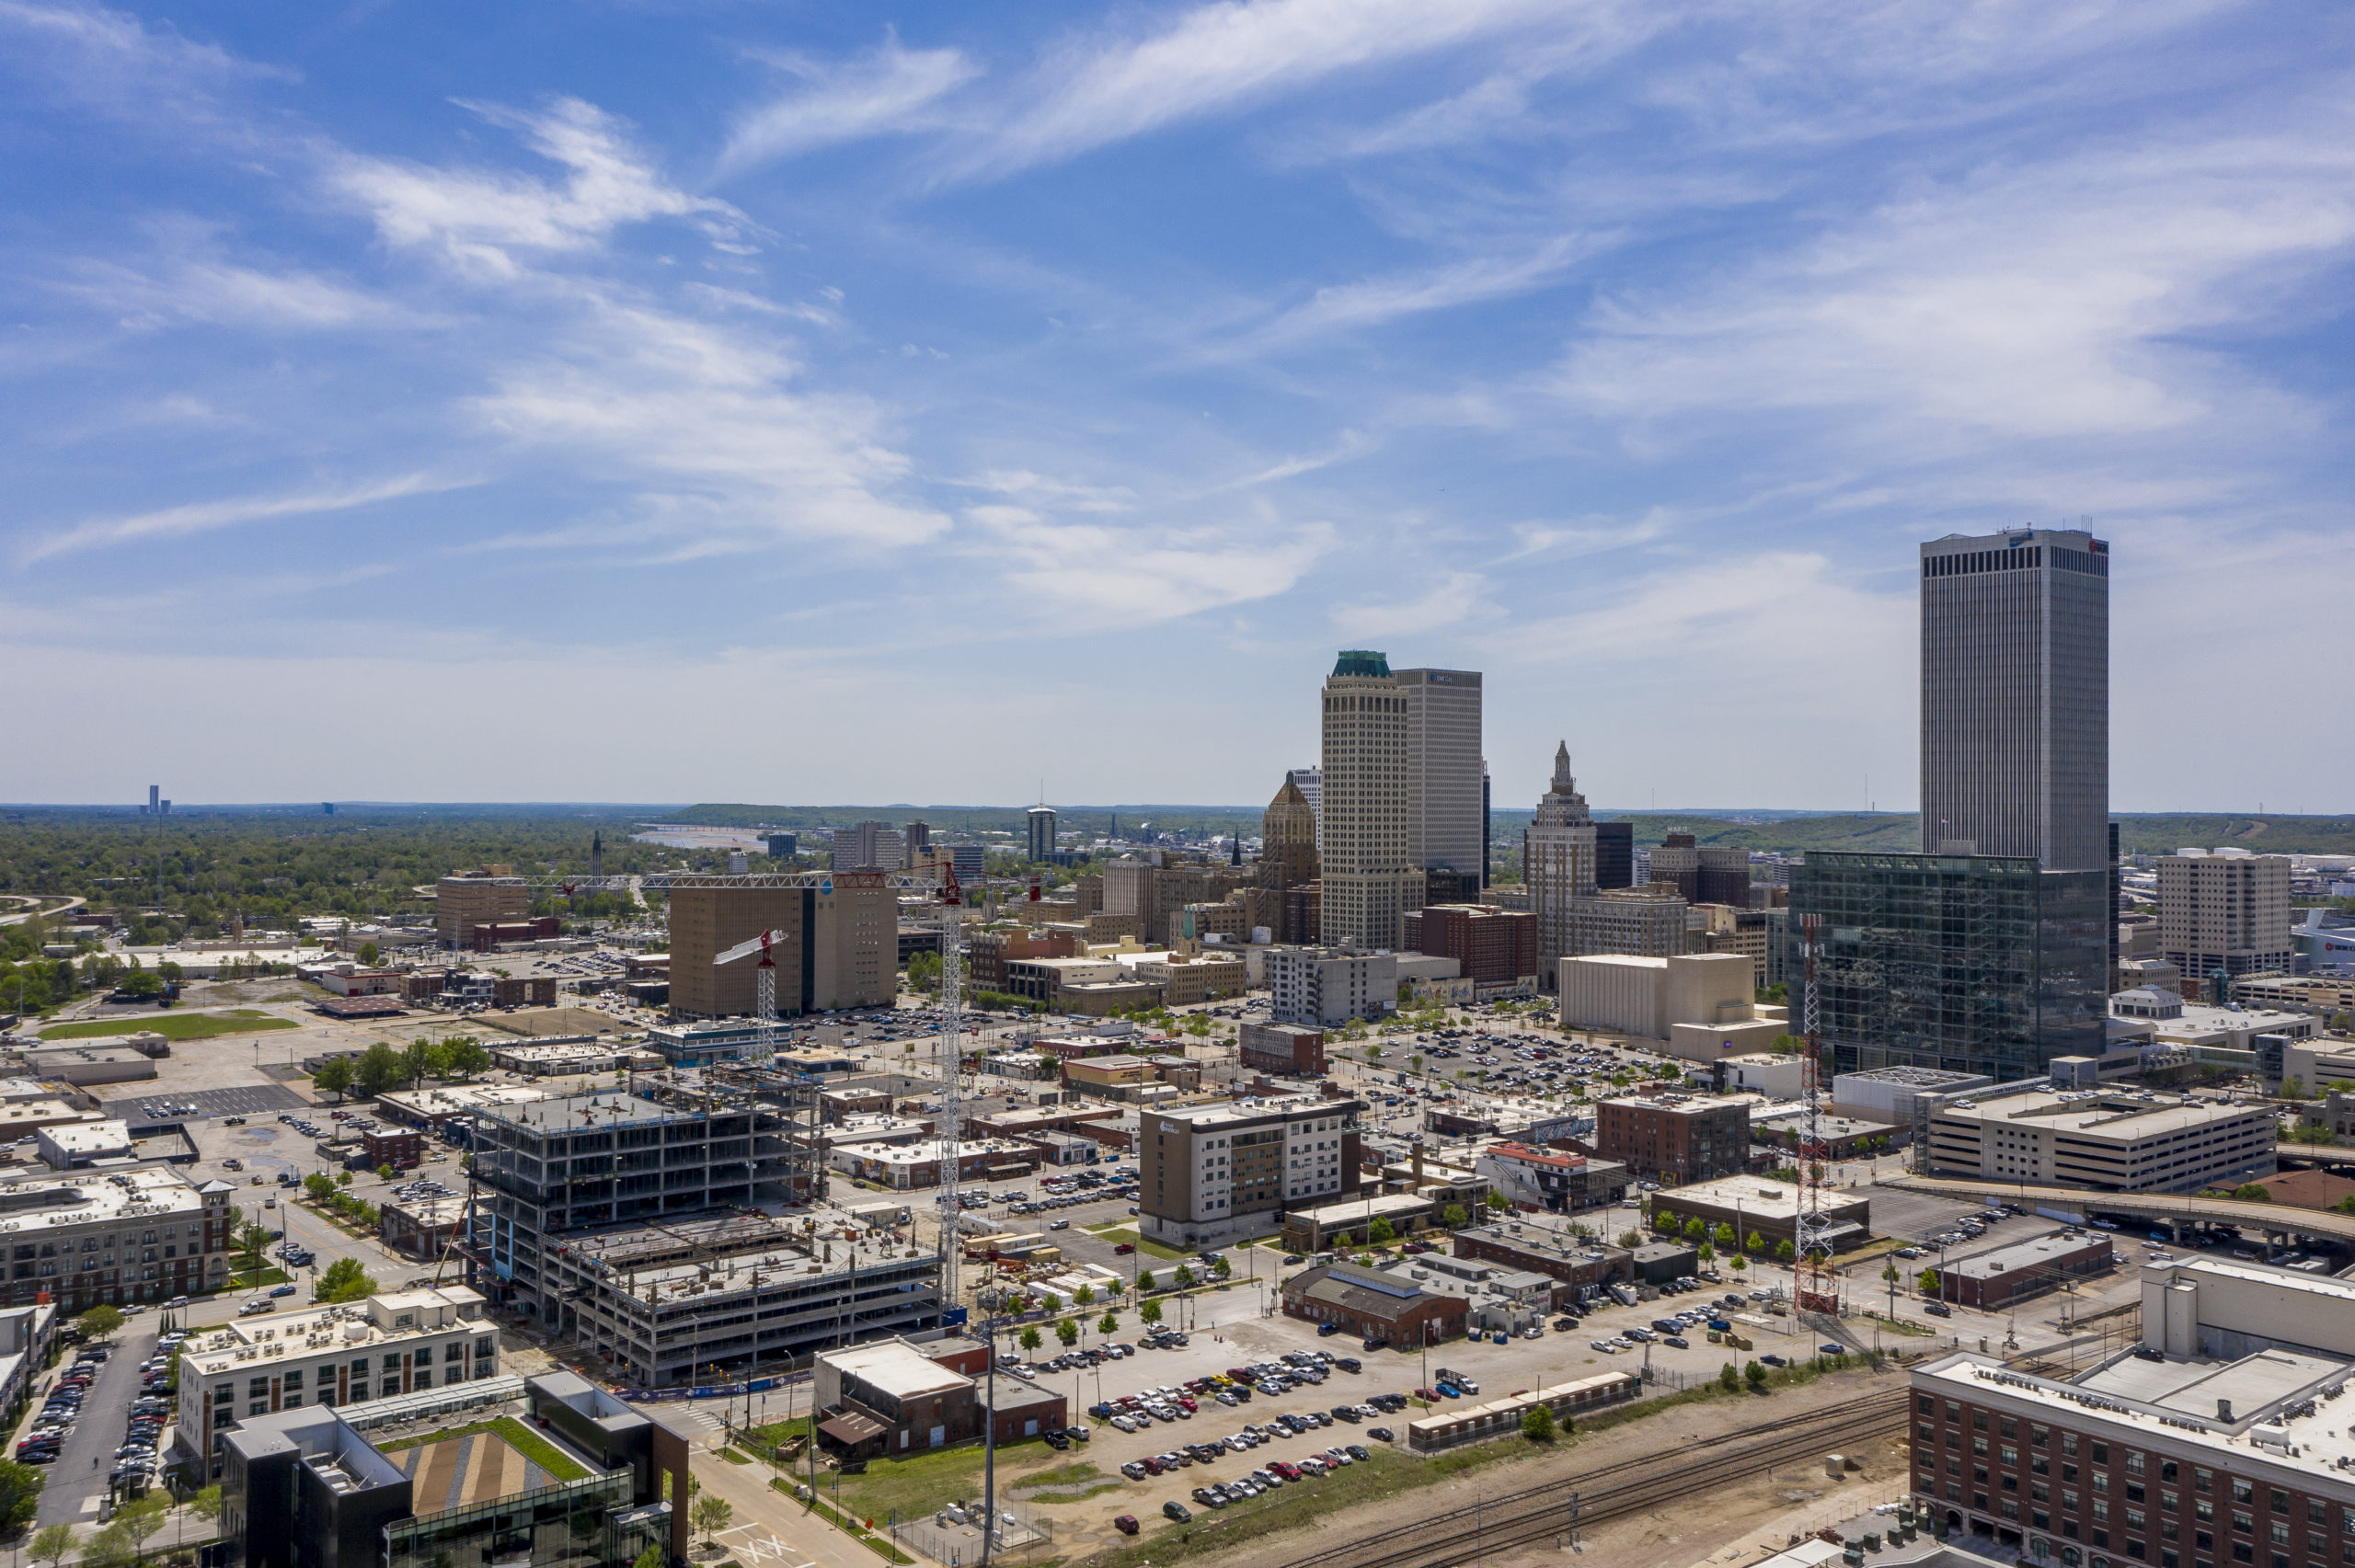 4/25/22 1:43:07 PM — Drone imagery of Tulsa, Oklahoma. Photo by Shane Bevel